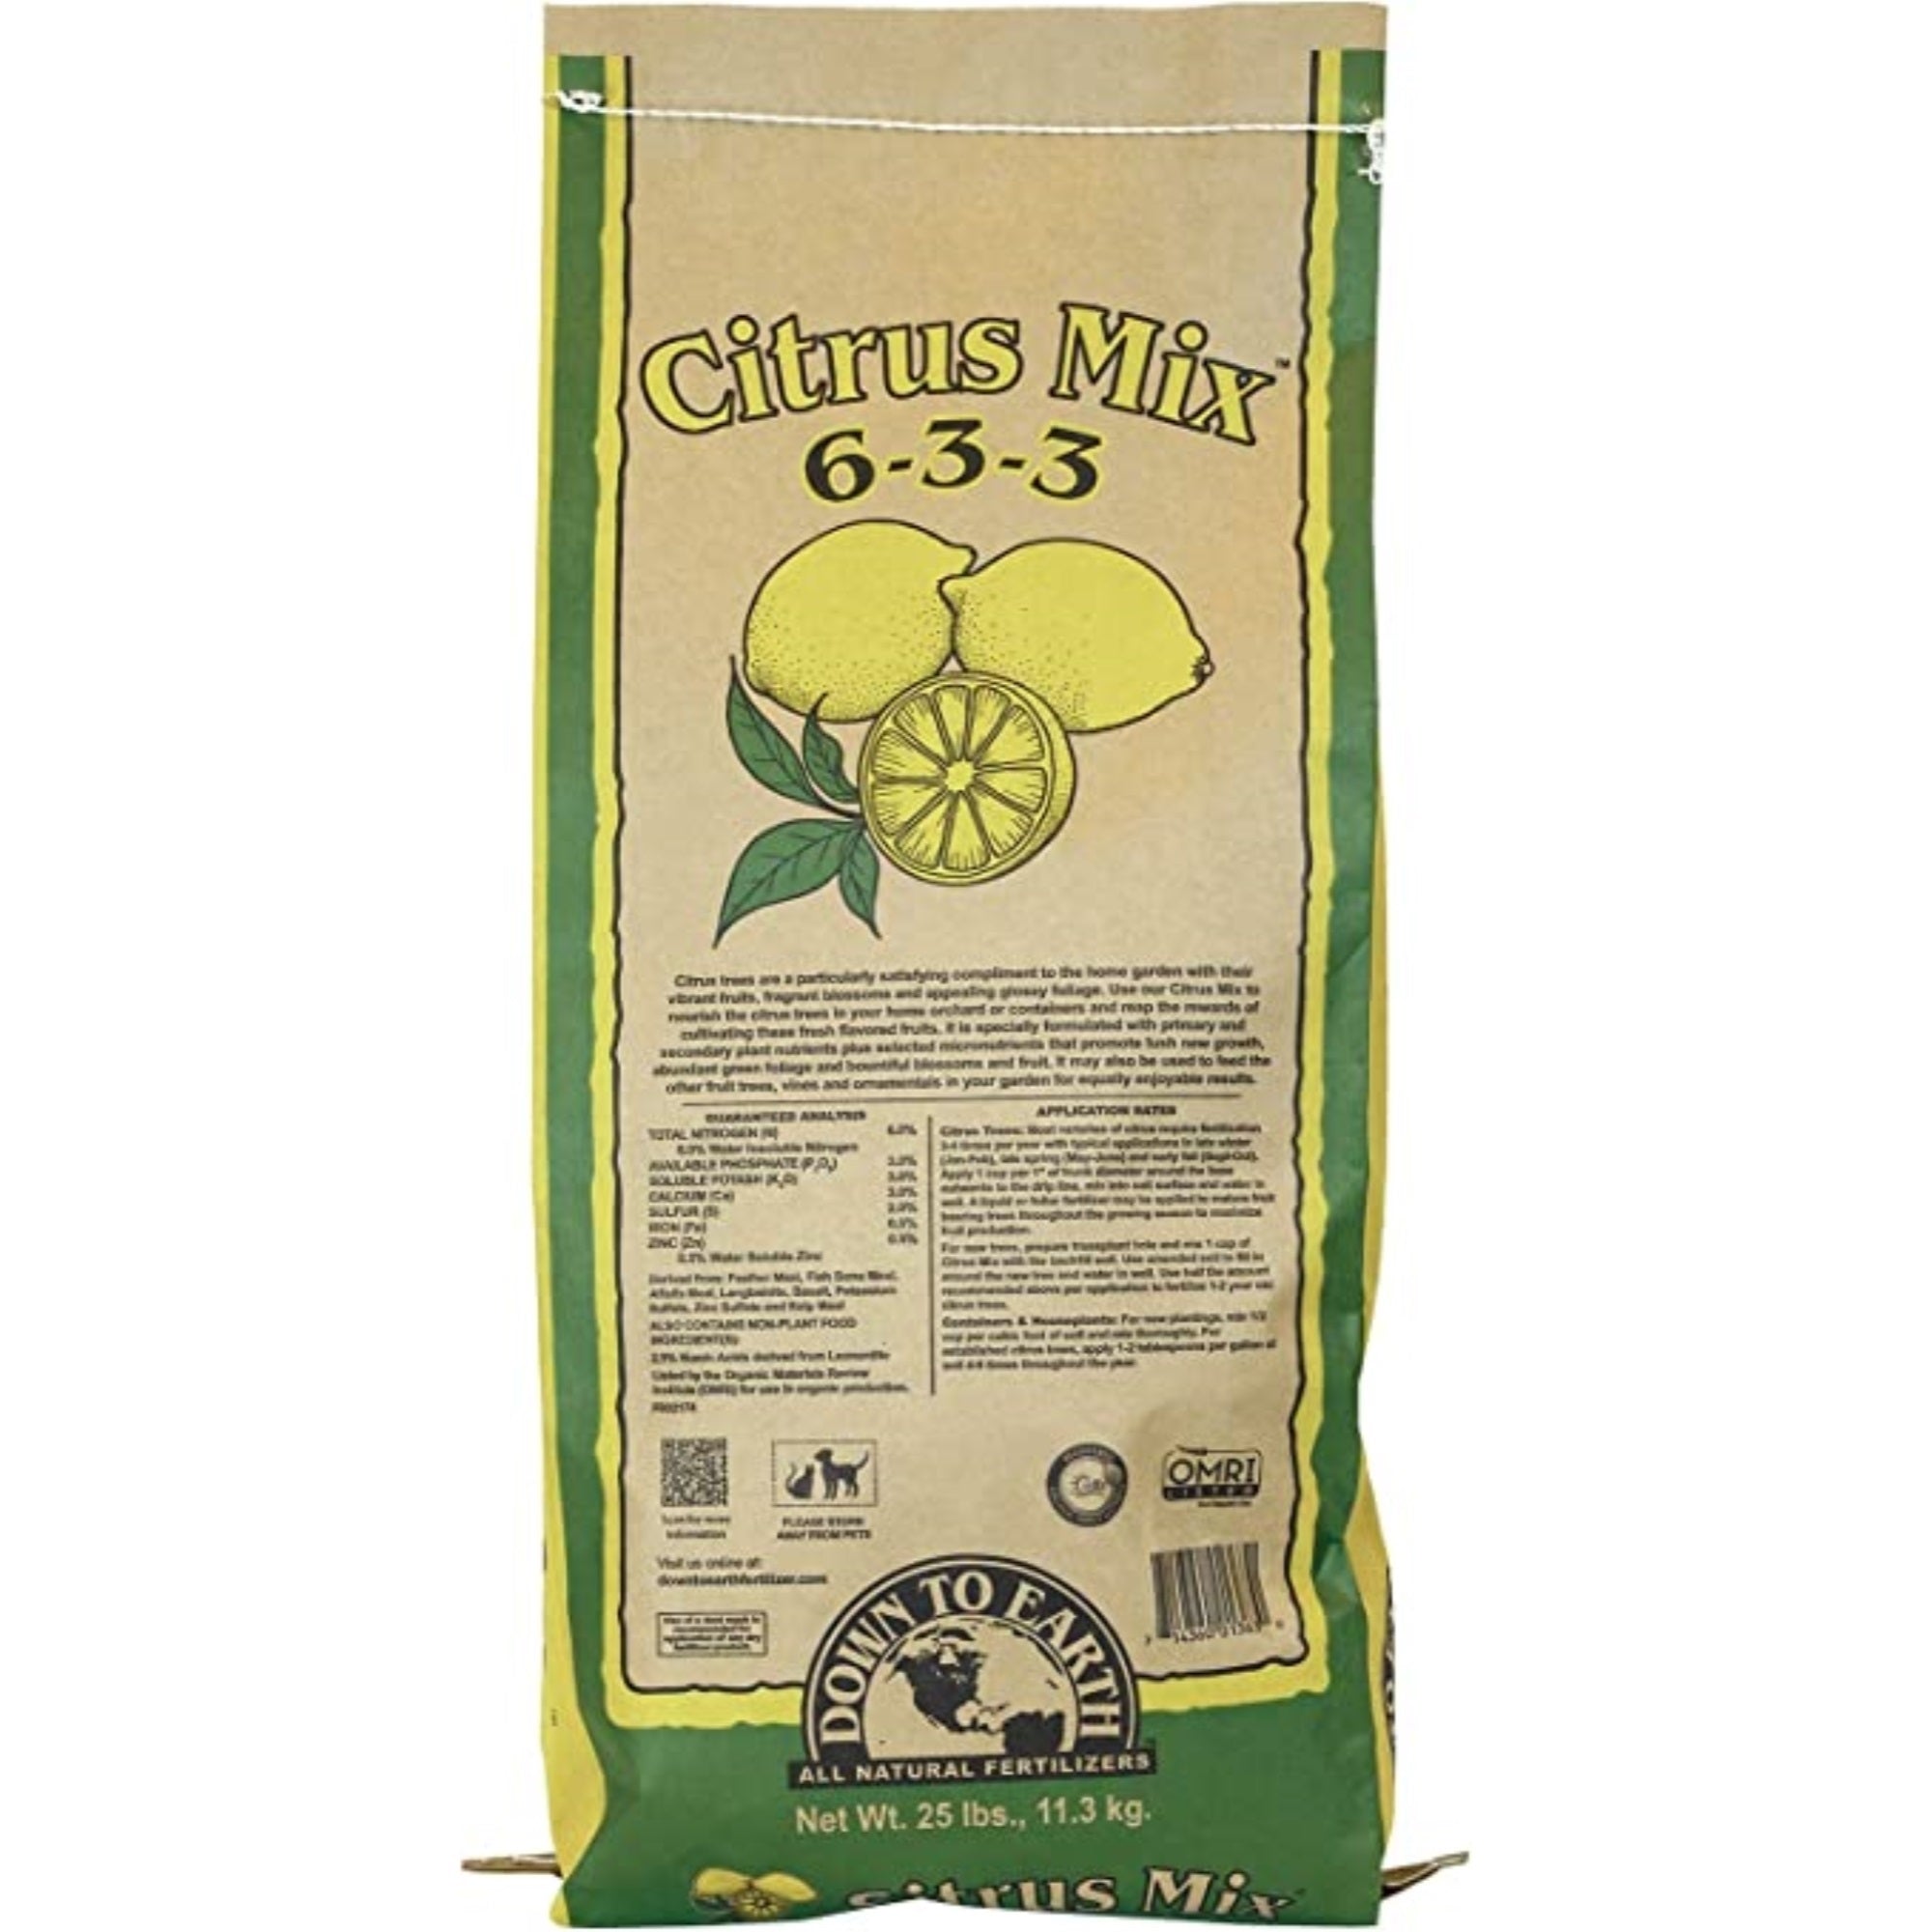 Down To Earth Organic Citrus Fertilizer Mix 6-3-3, 25 lbs